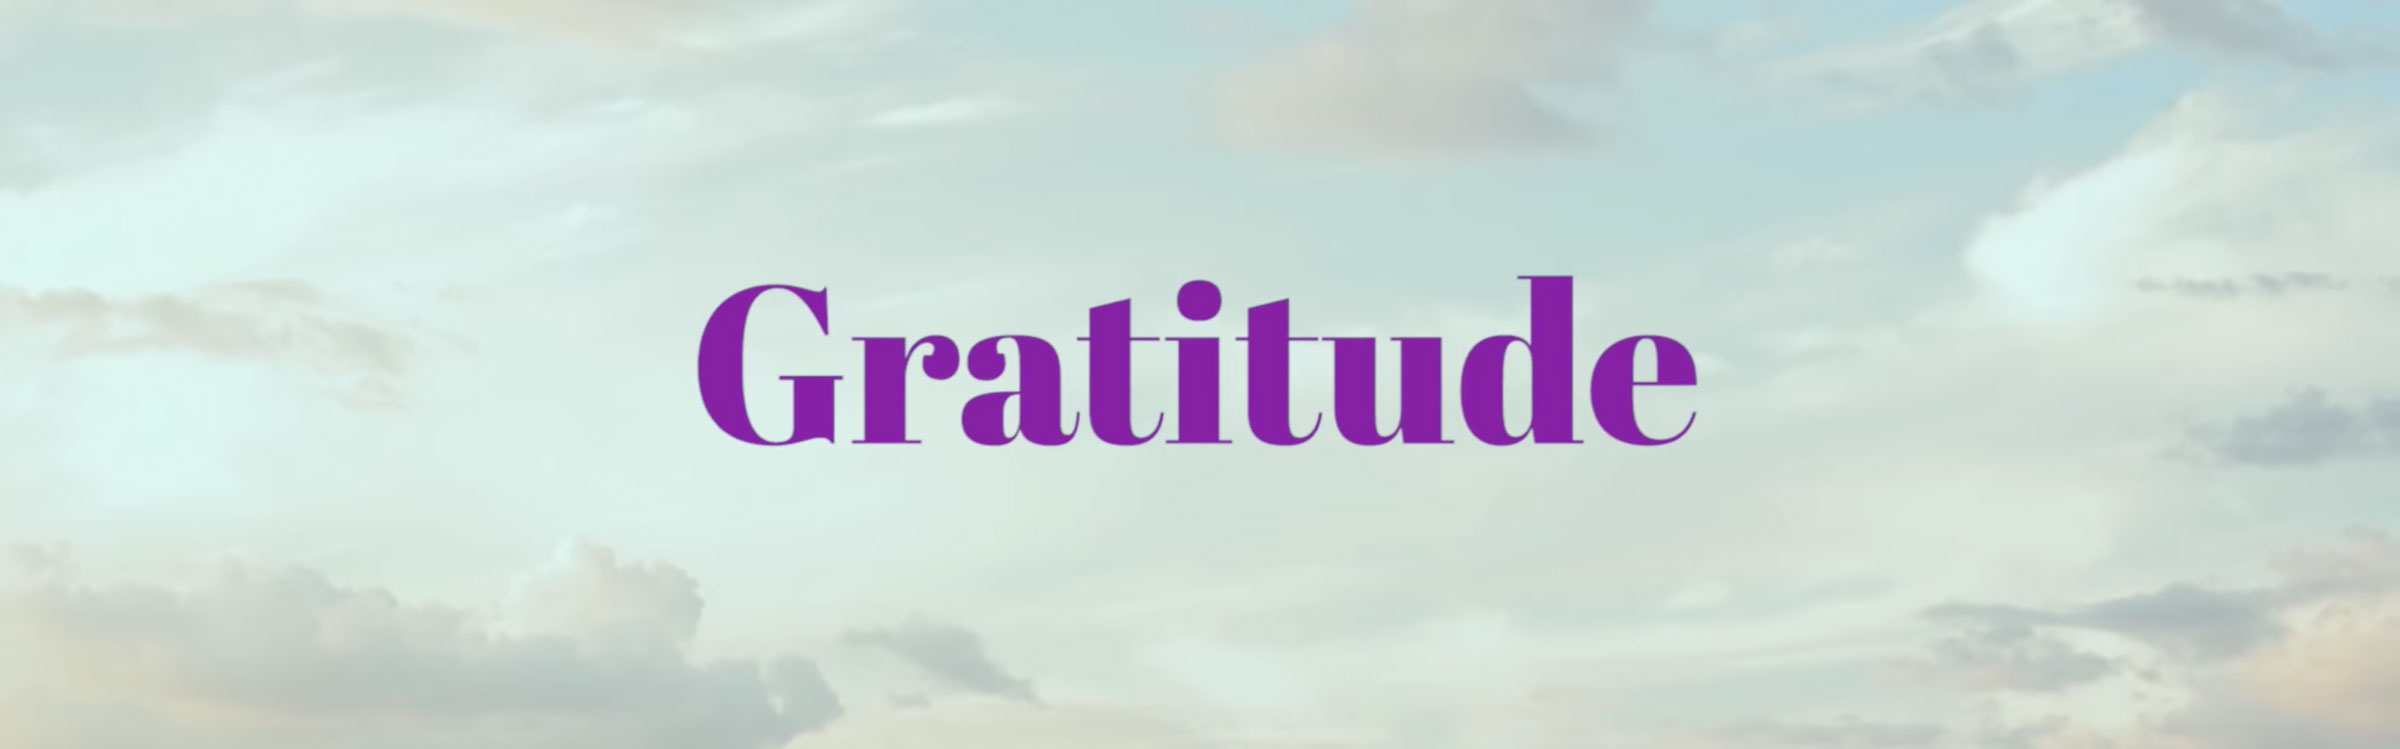 Gratitude header